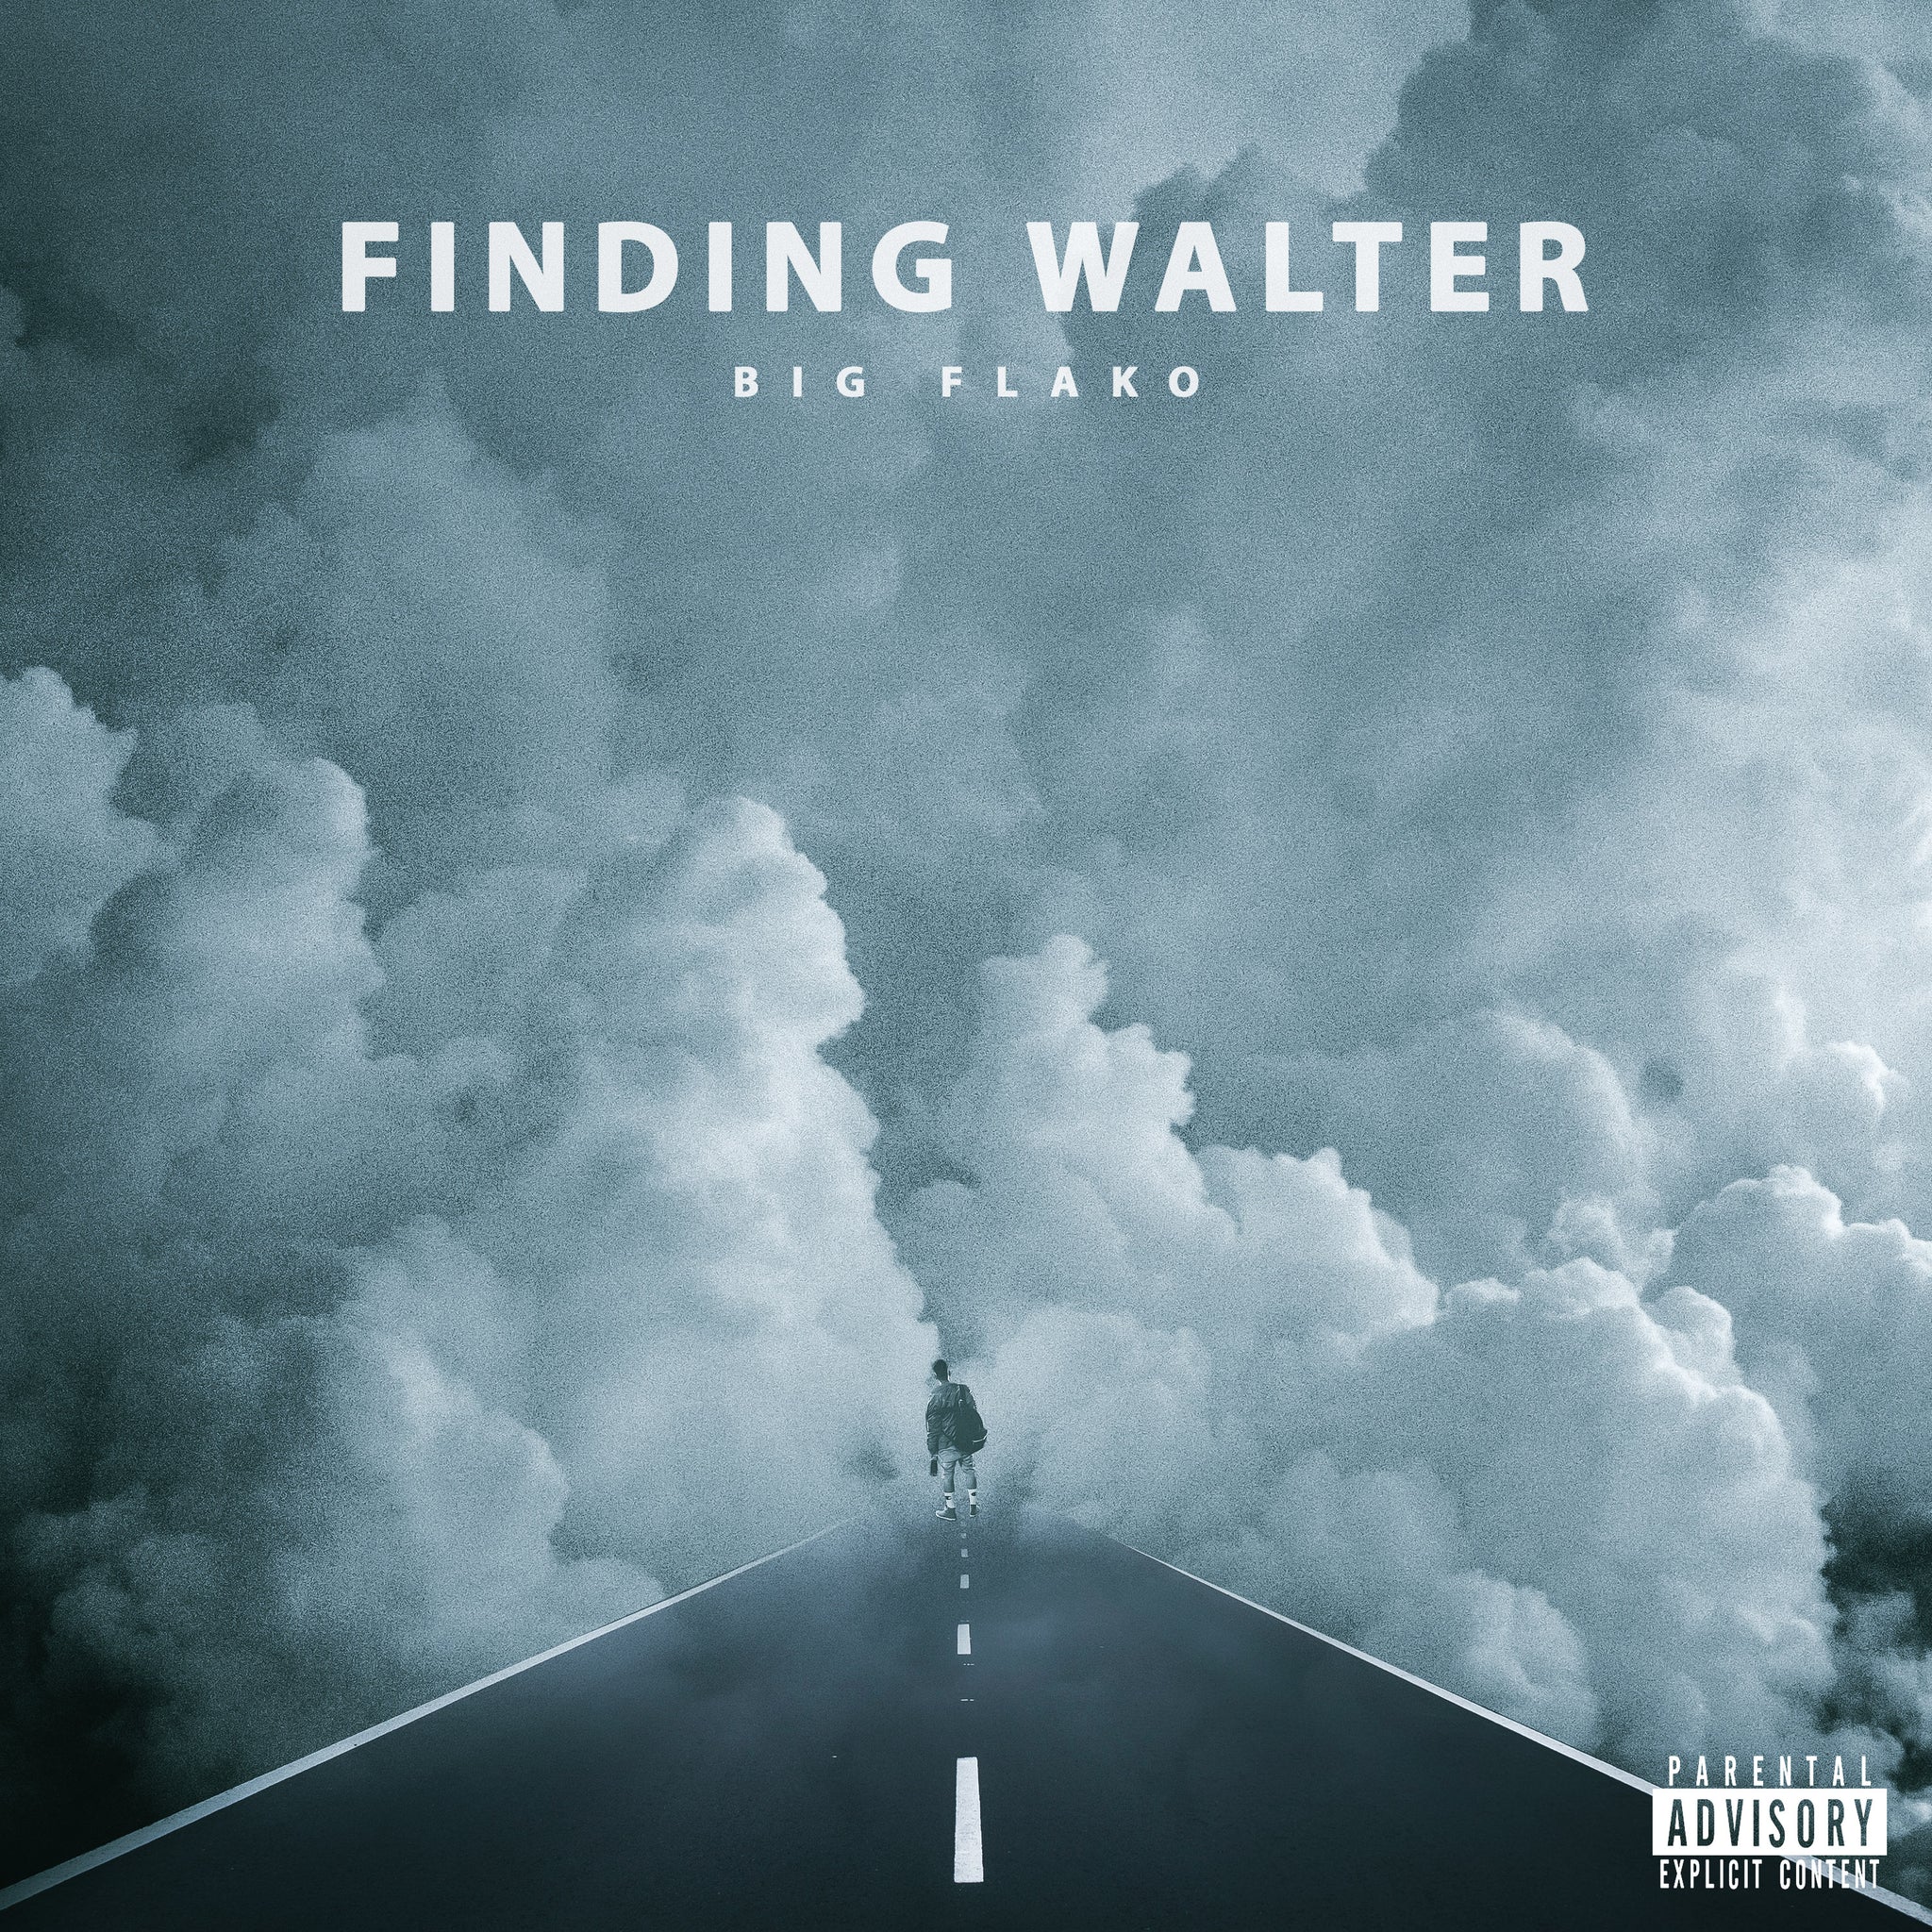 Finding Walter by BIG FLAKO